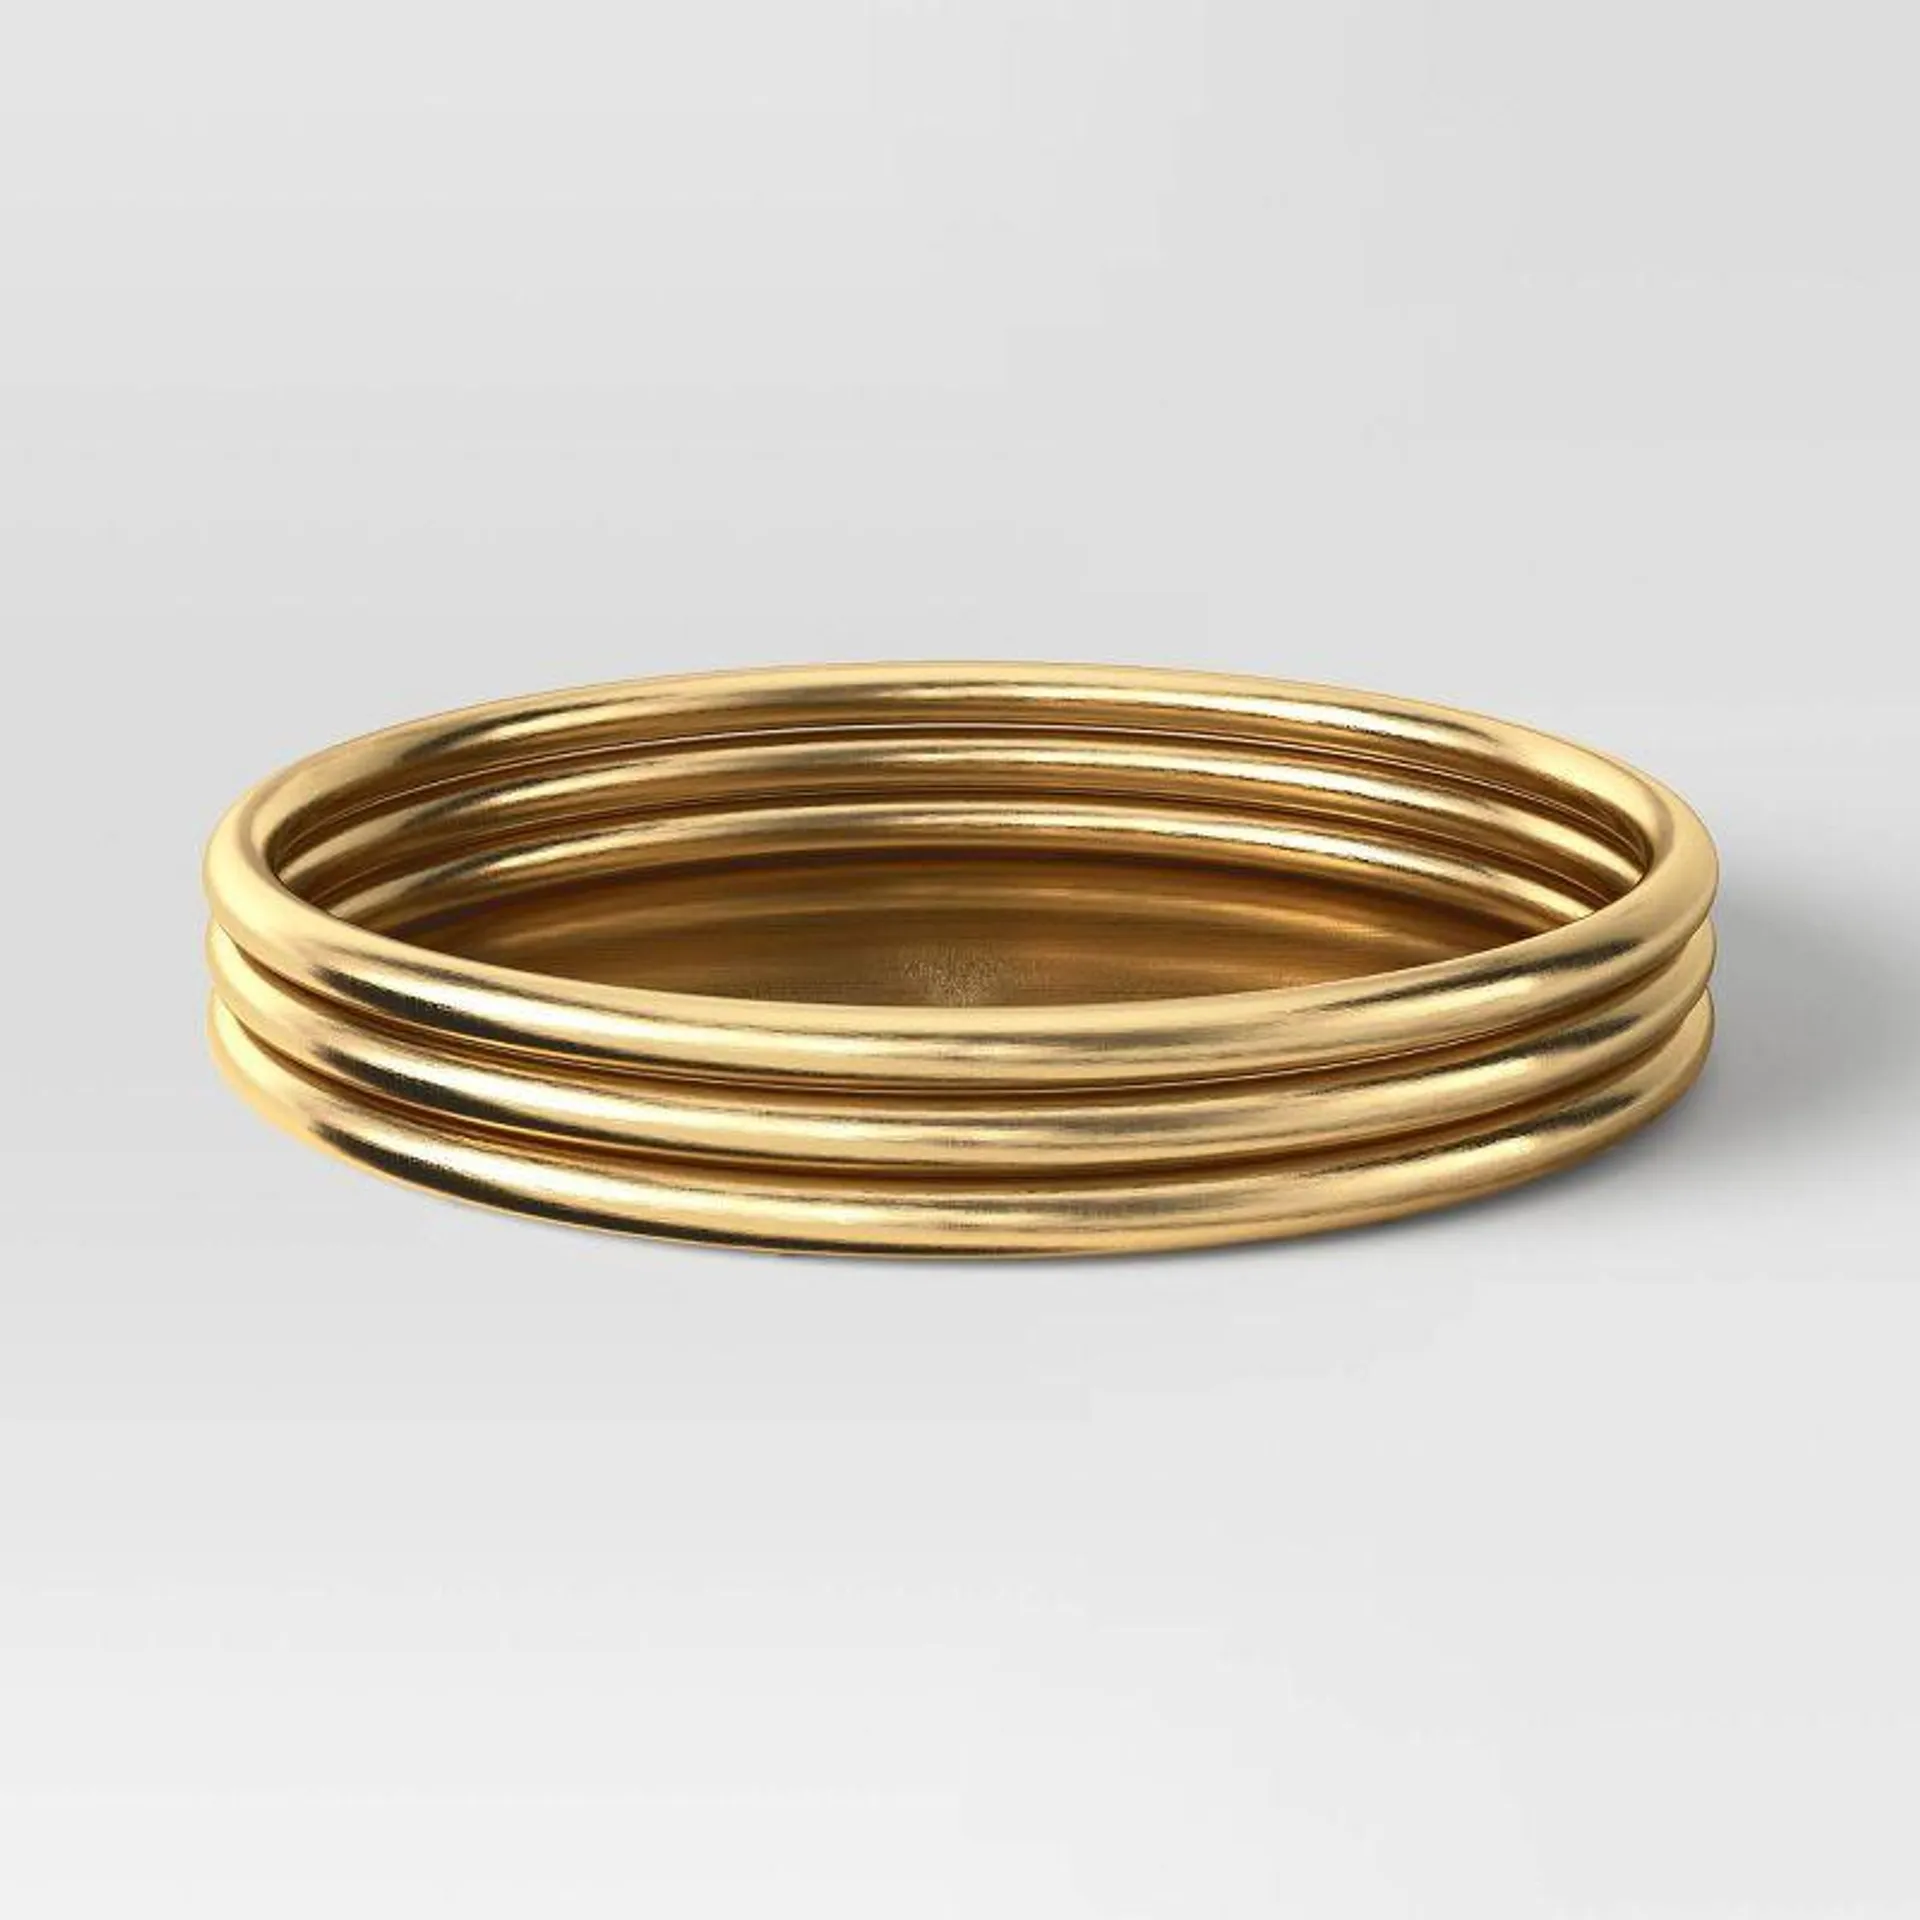 Metal Ribbed Decorative Tray Gold - Threshold™